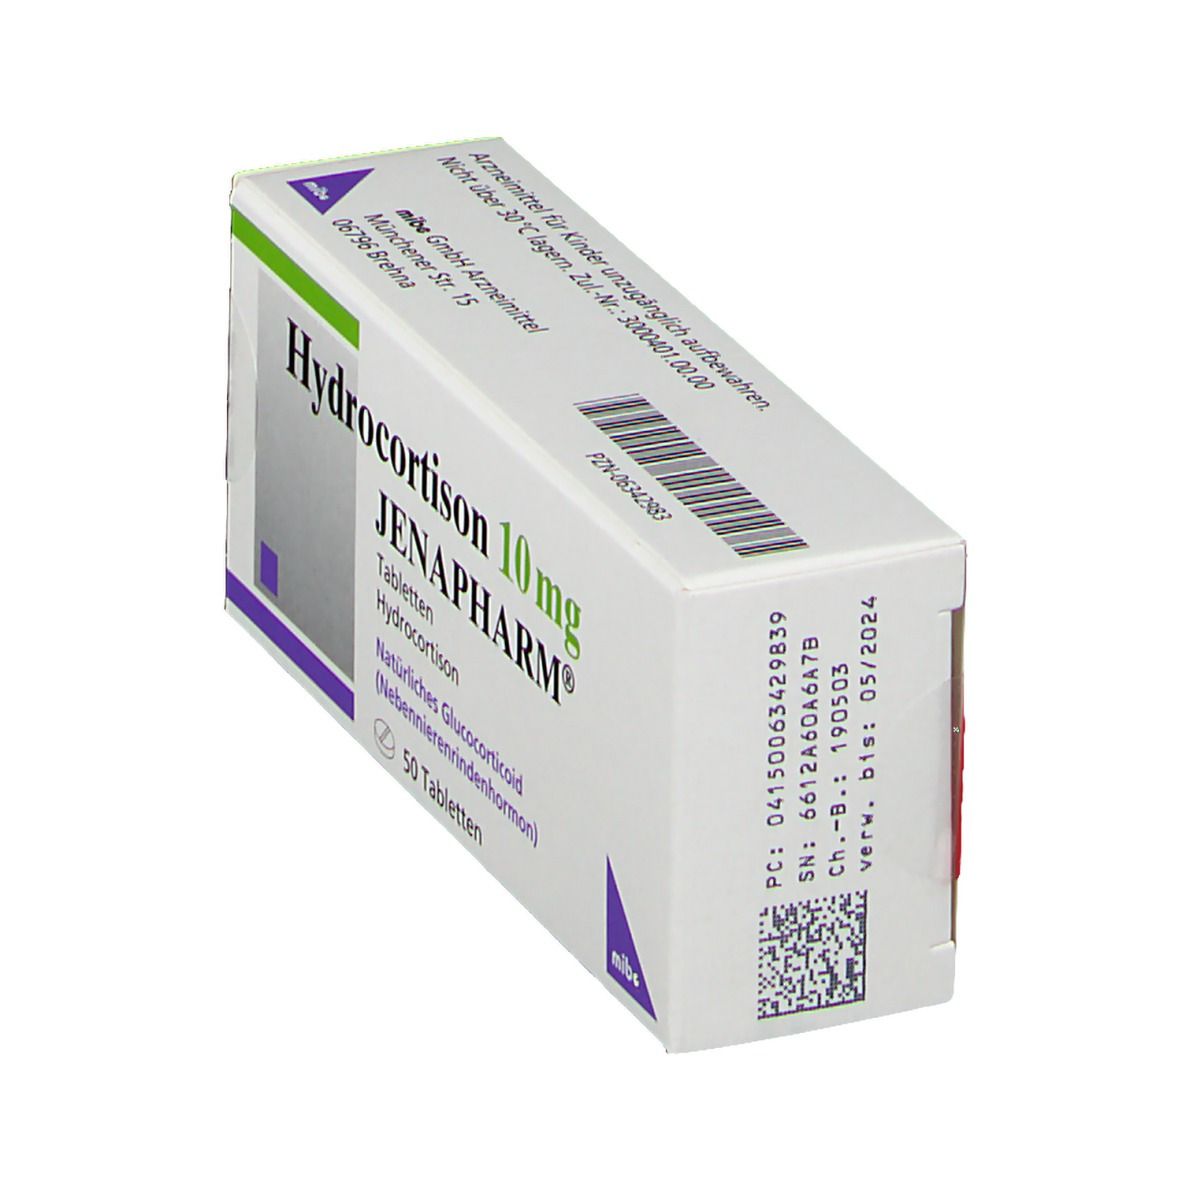 Hydrocortison 10 mg Jenapharm